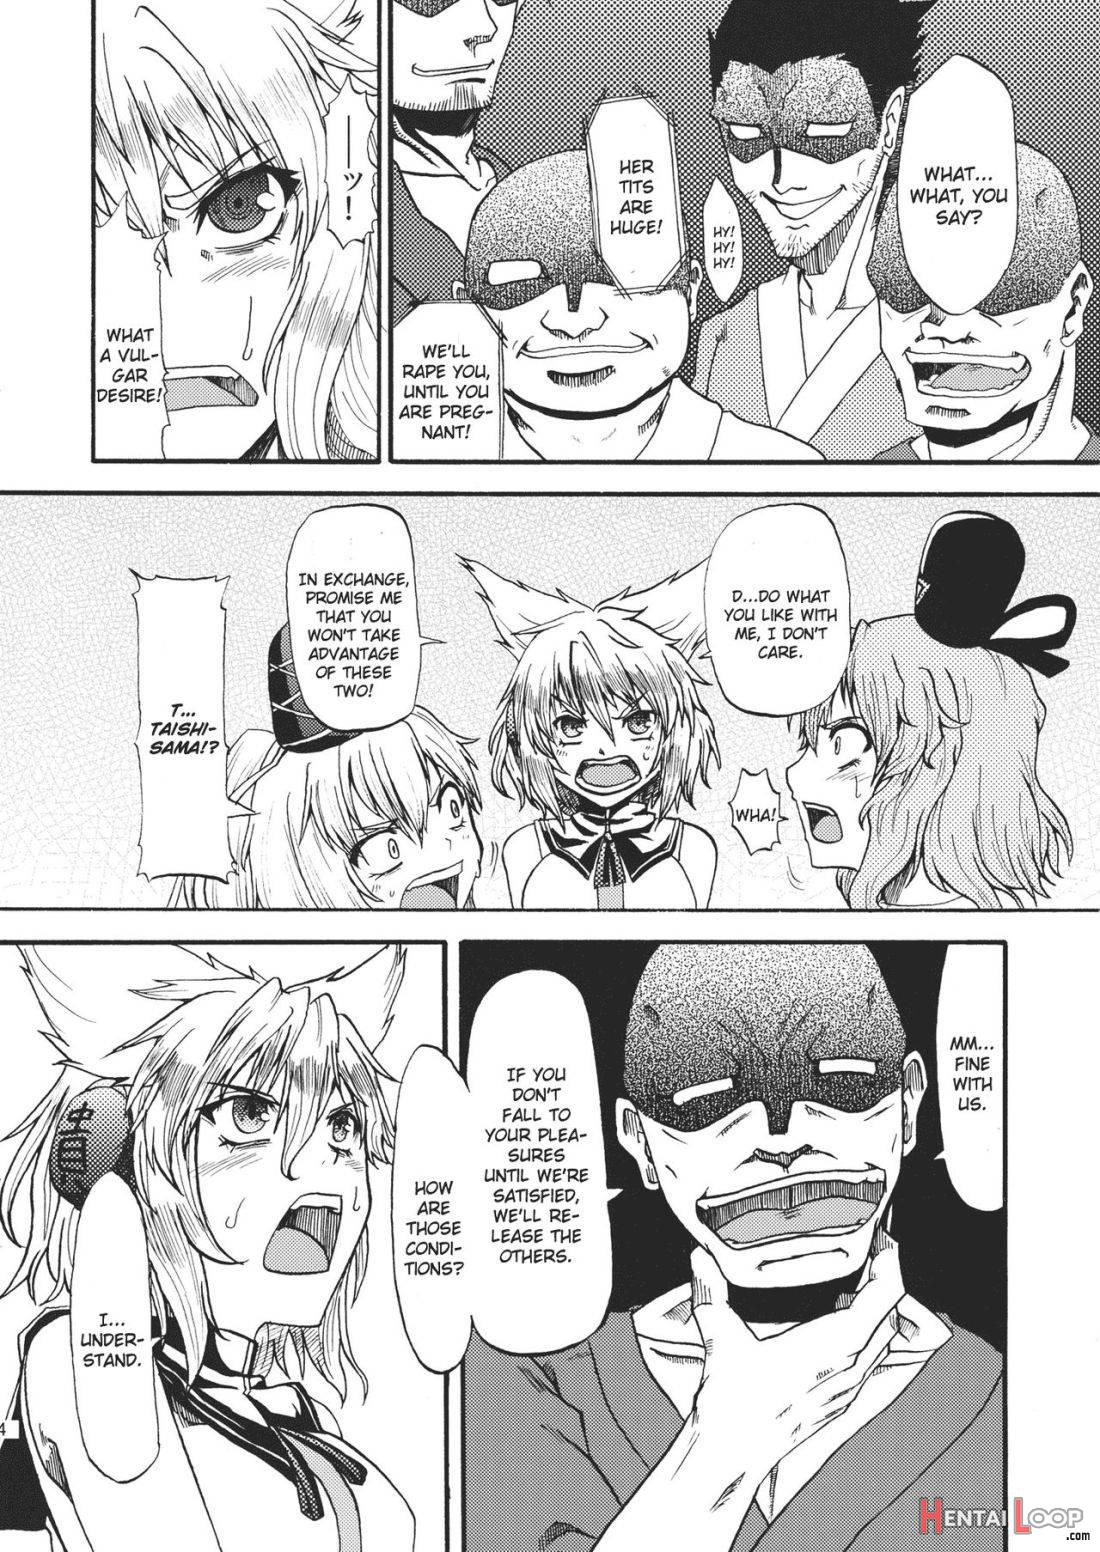 Gouzoku Rape page 3